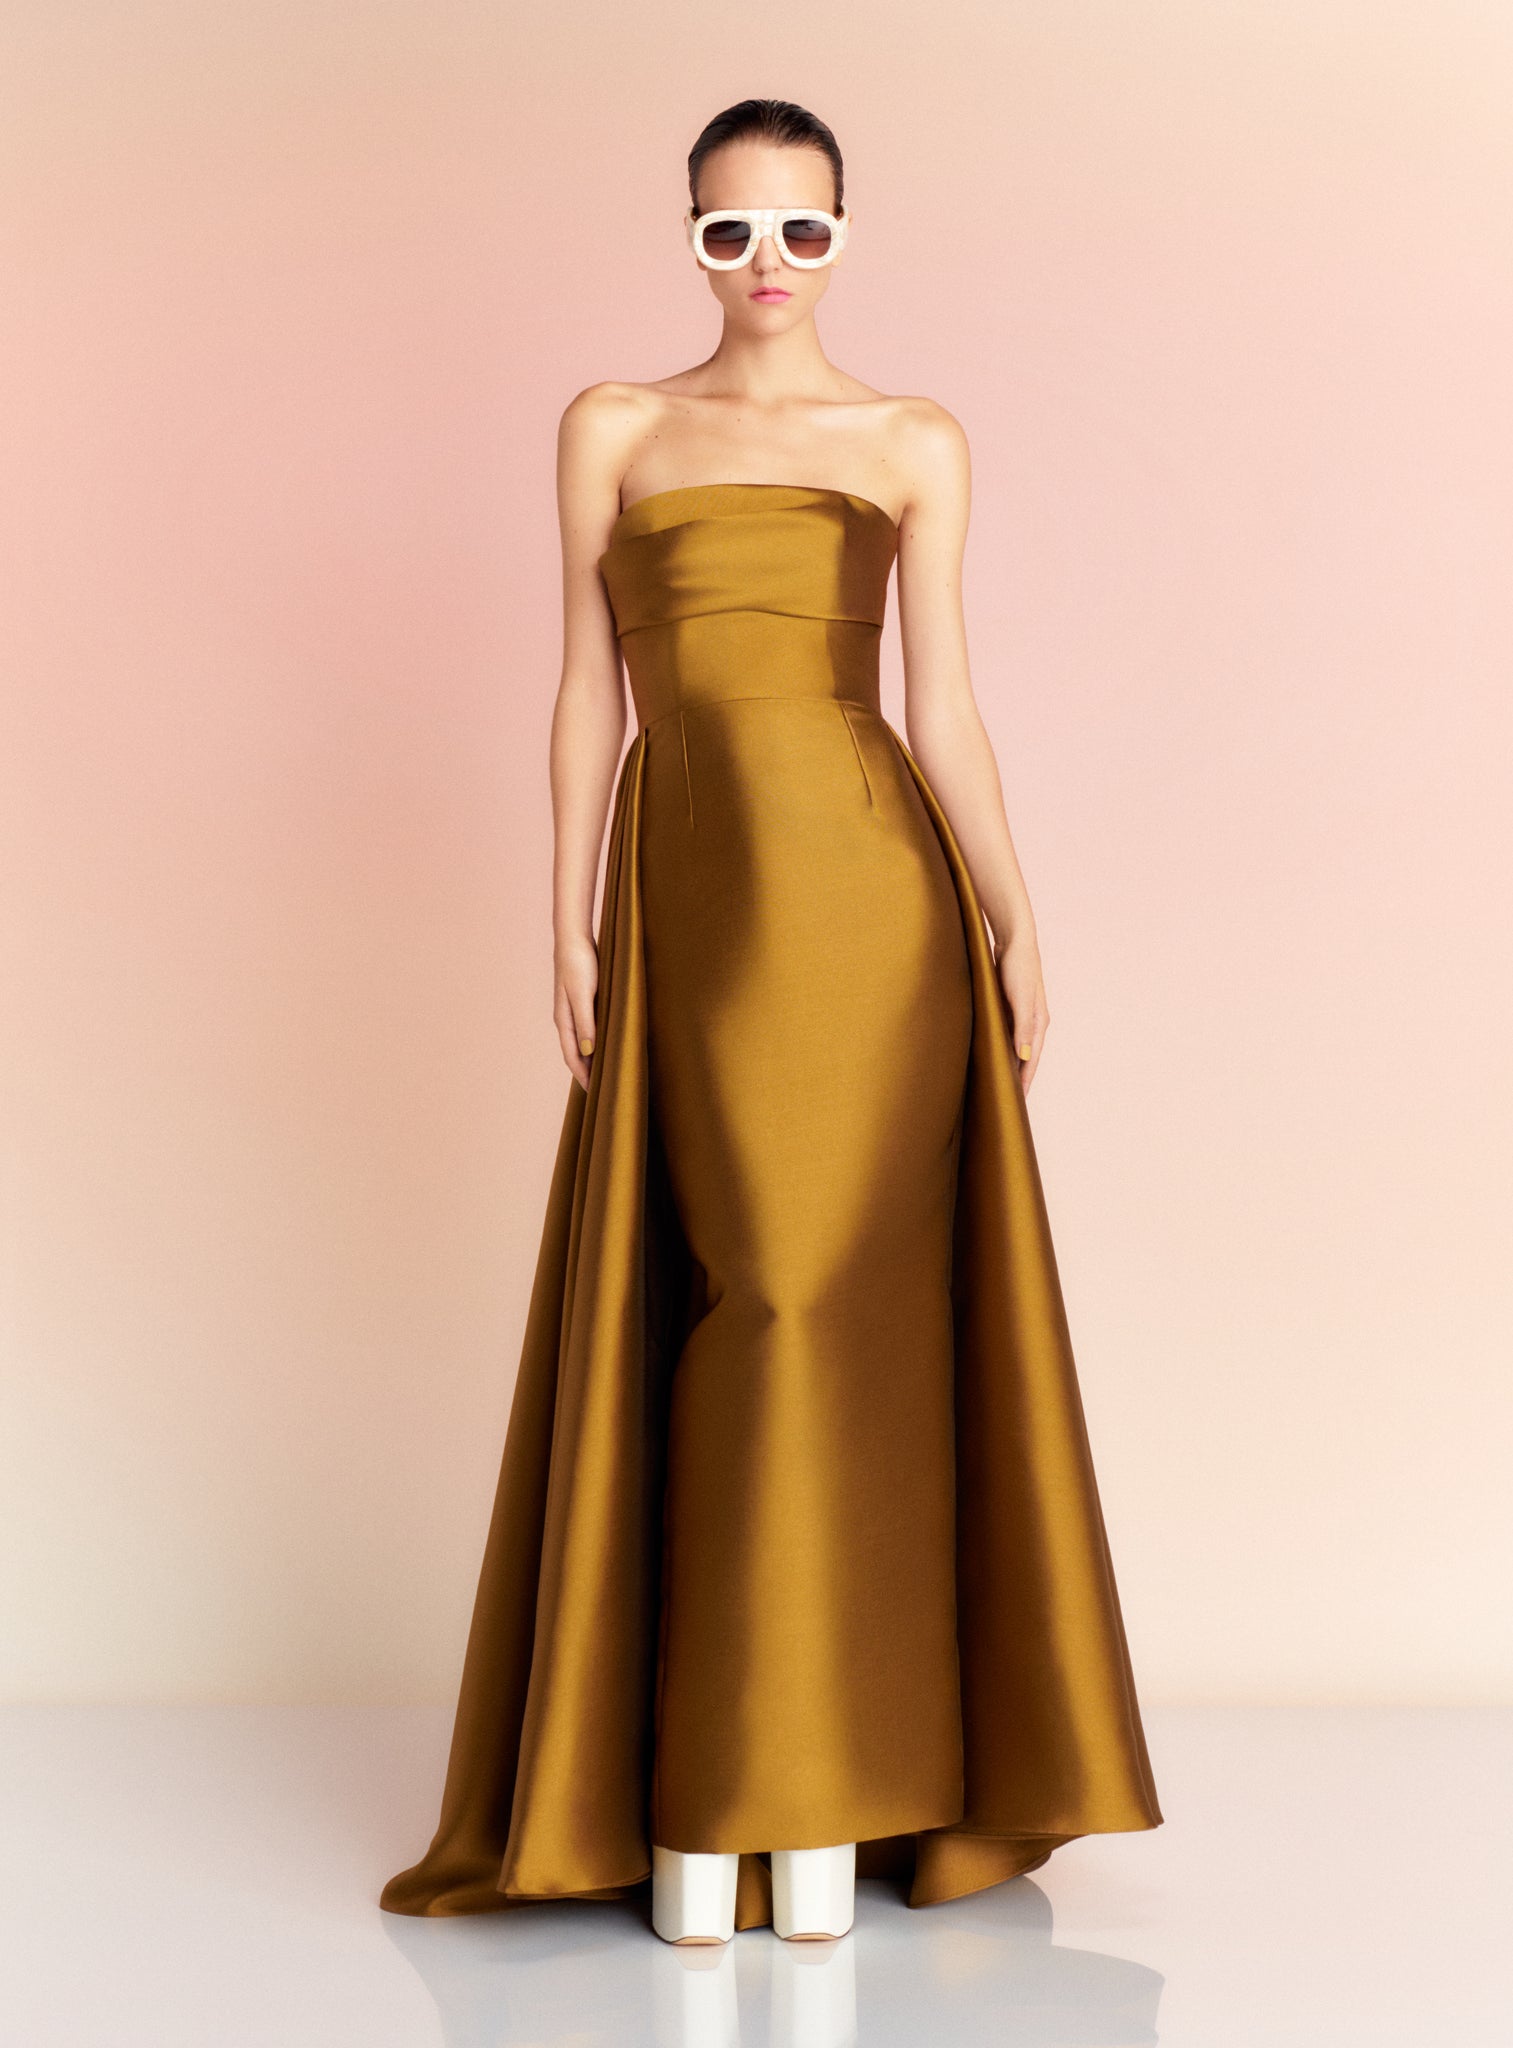 The Tiffany Maxi Dress in Gold